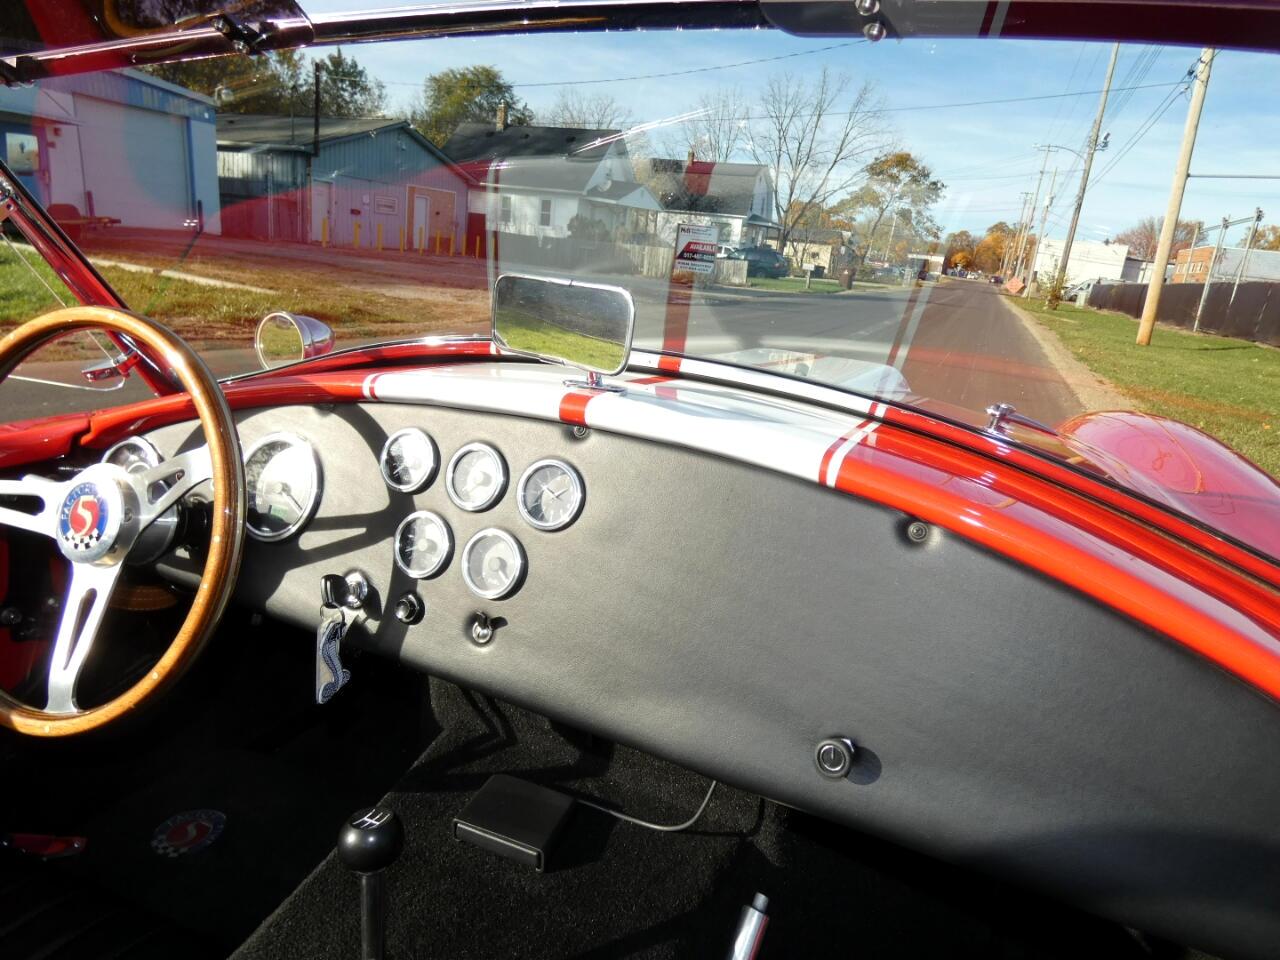 1965 Shelby Cobra 33